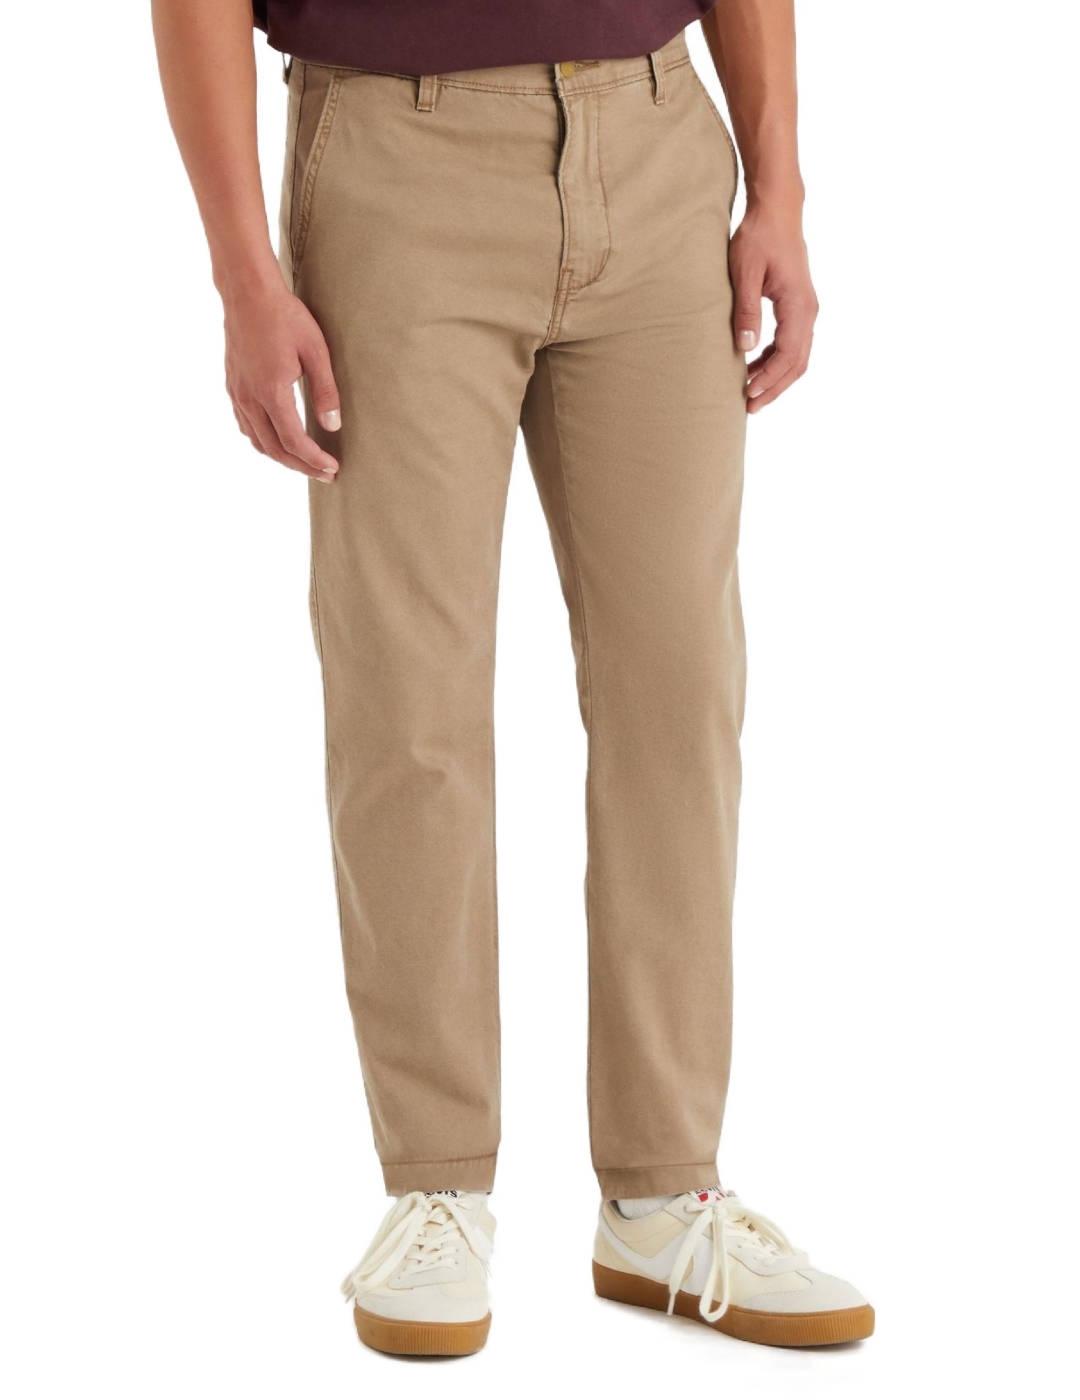 Pantalón Levi´s chino standard beige tapered de hombre